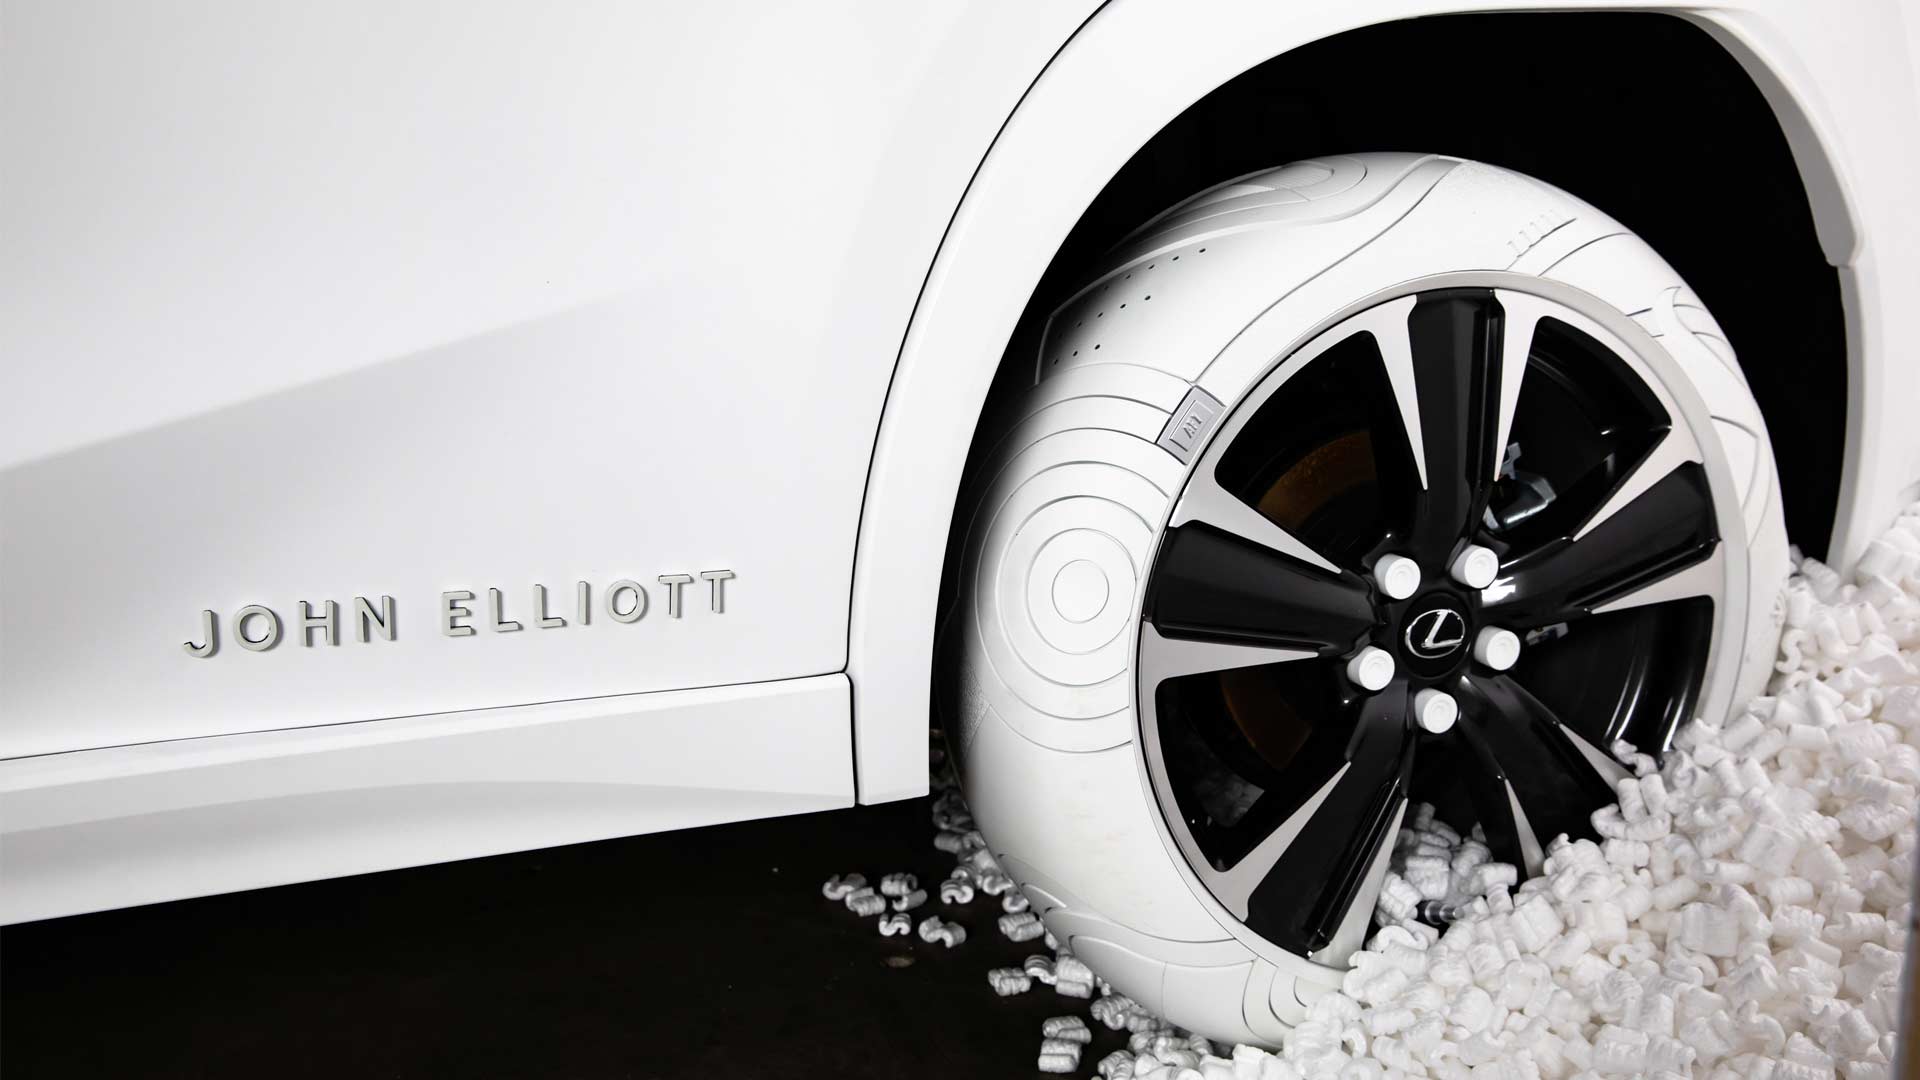 2019-Lexus-UX-Sole-of-the-UX-John-Elliott-Nike-AF1-shoe-inspired-tires_2